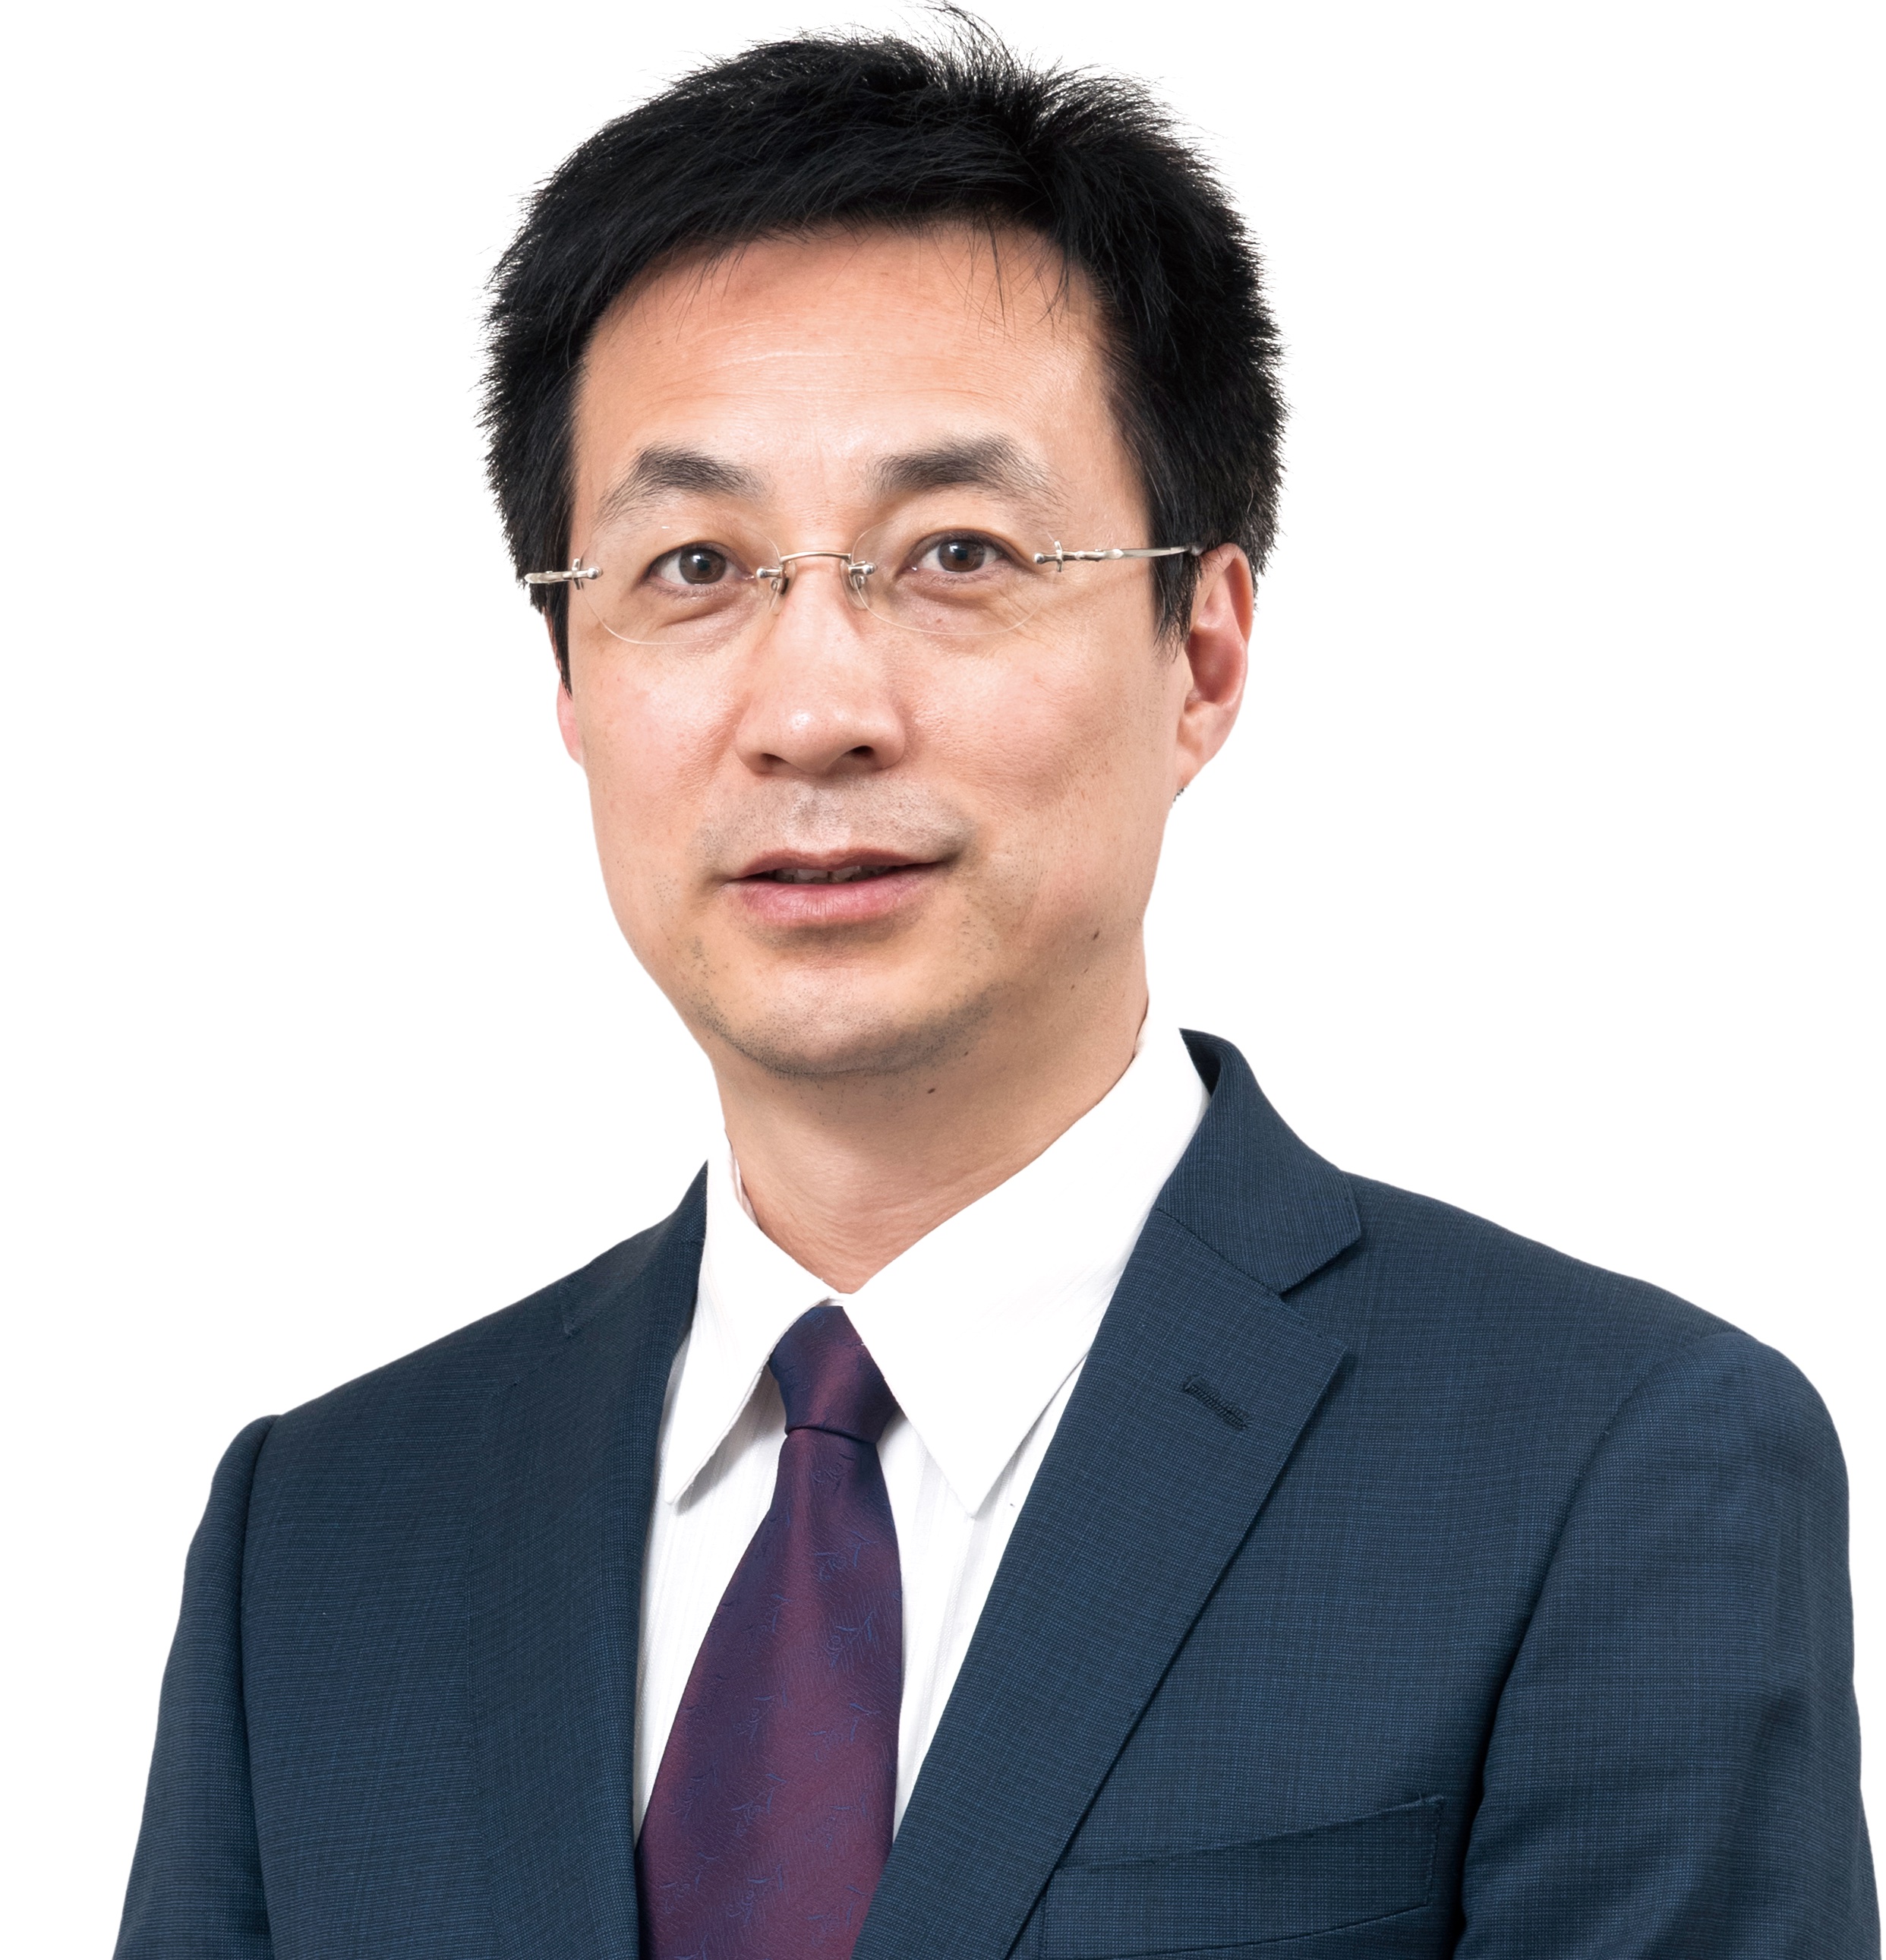 Prof. Qingfeng Liu